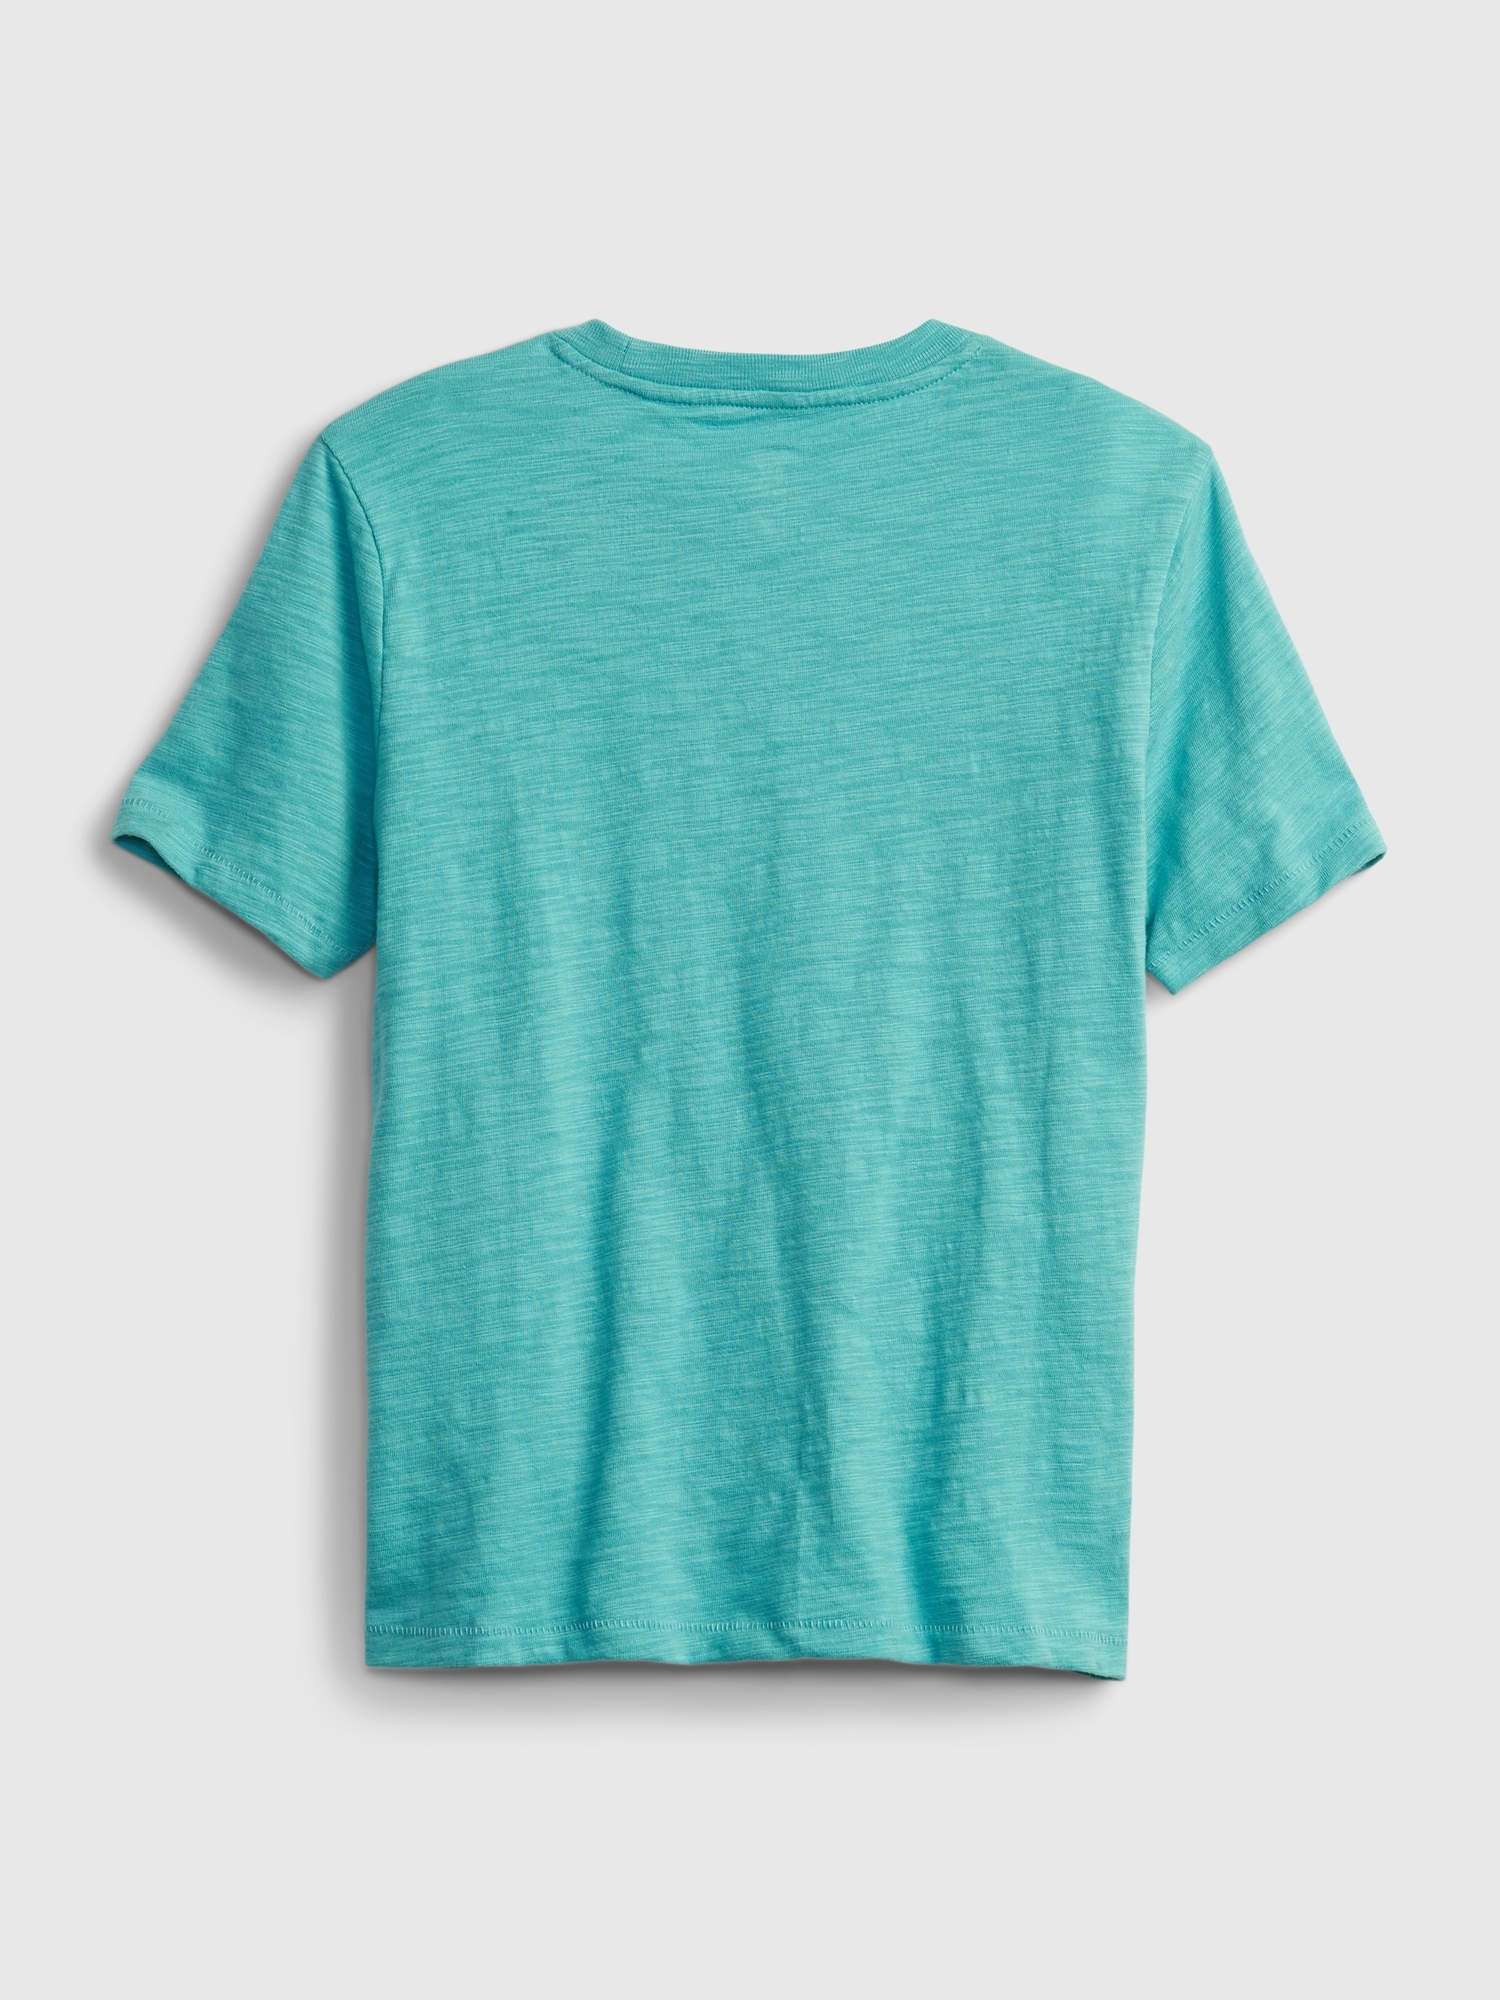 Kids Lenticular Graphic T-Shirt | Gap